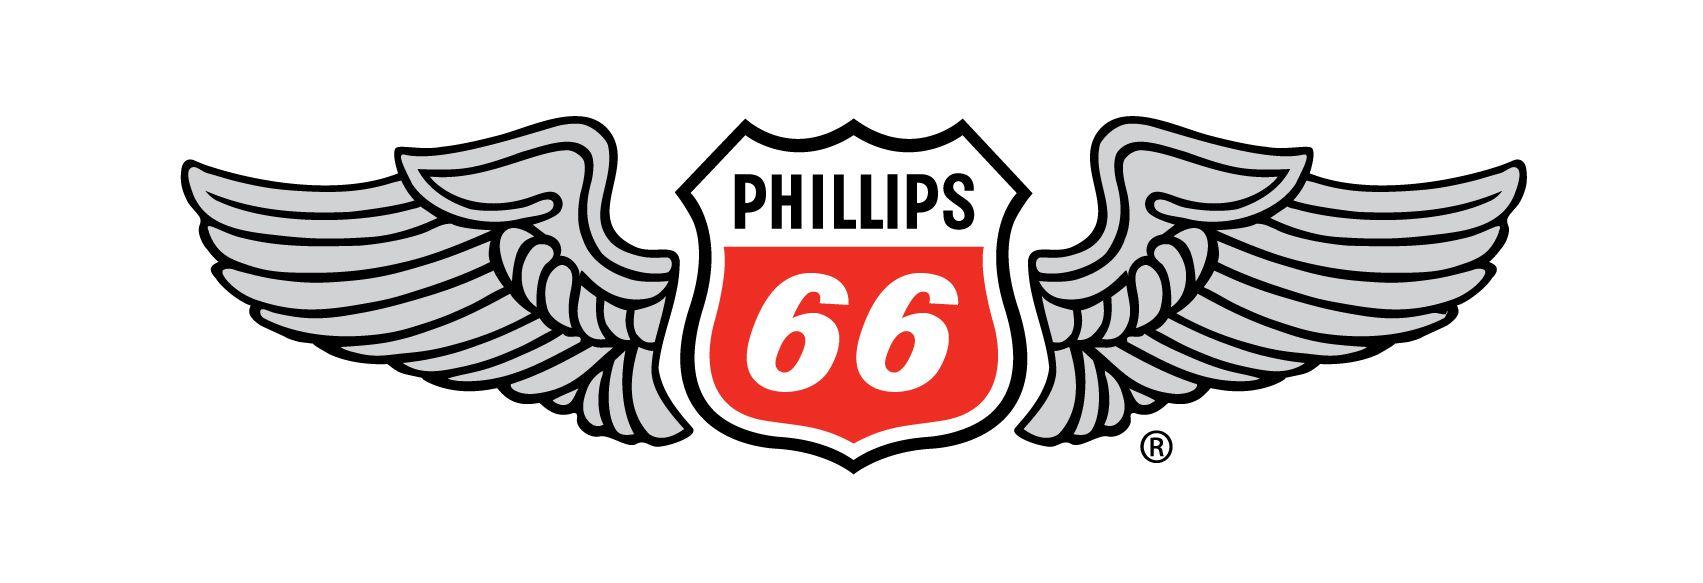 P66 Logo - Phillips 66 Aviation Lubricants